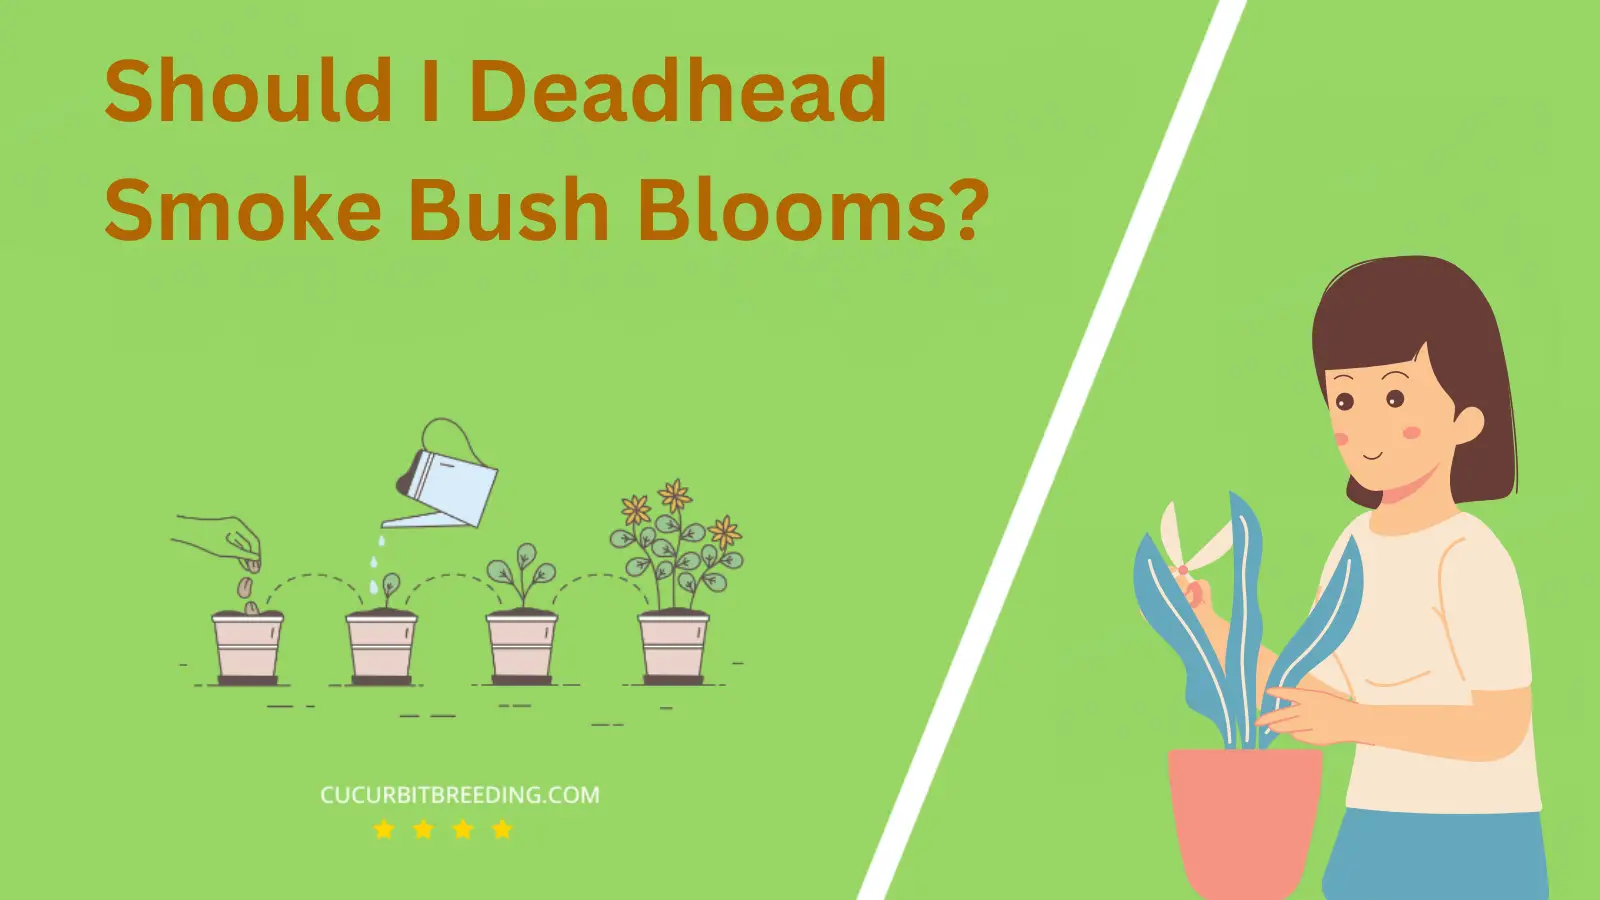 Should I Deadhead Smoke Bush Blooms?